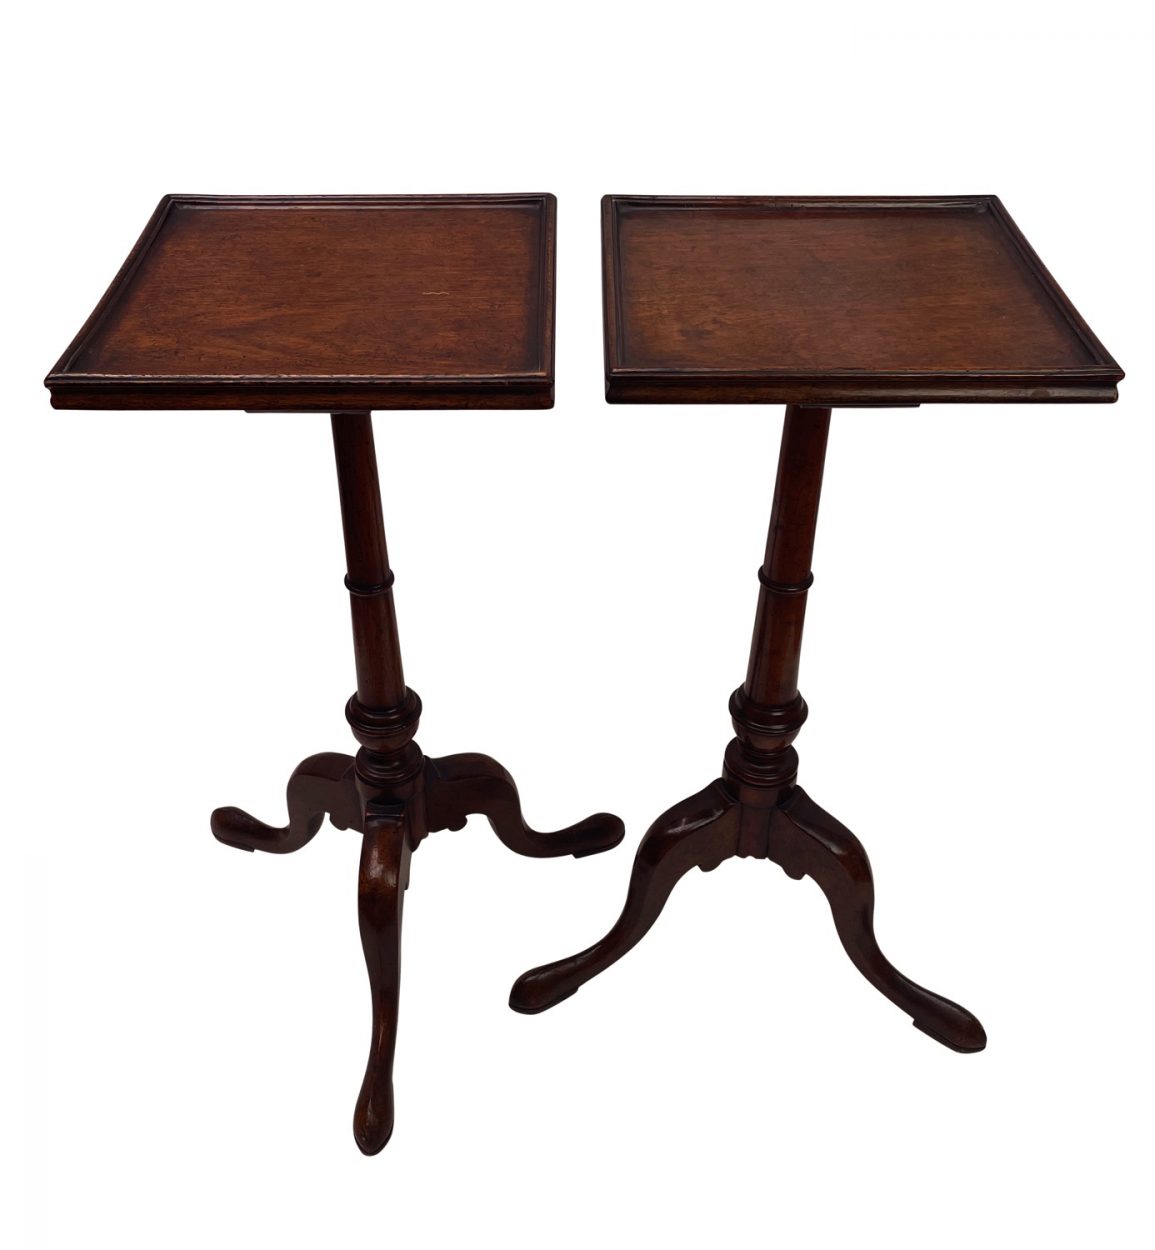 Pair of Georgian style three pedestal wine tables